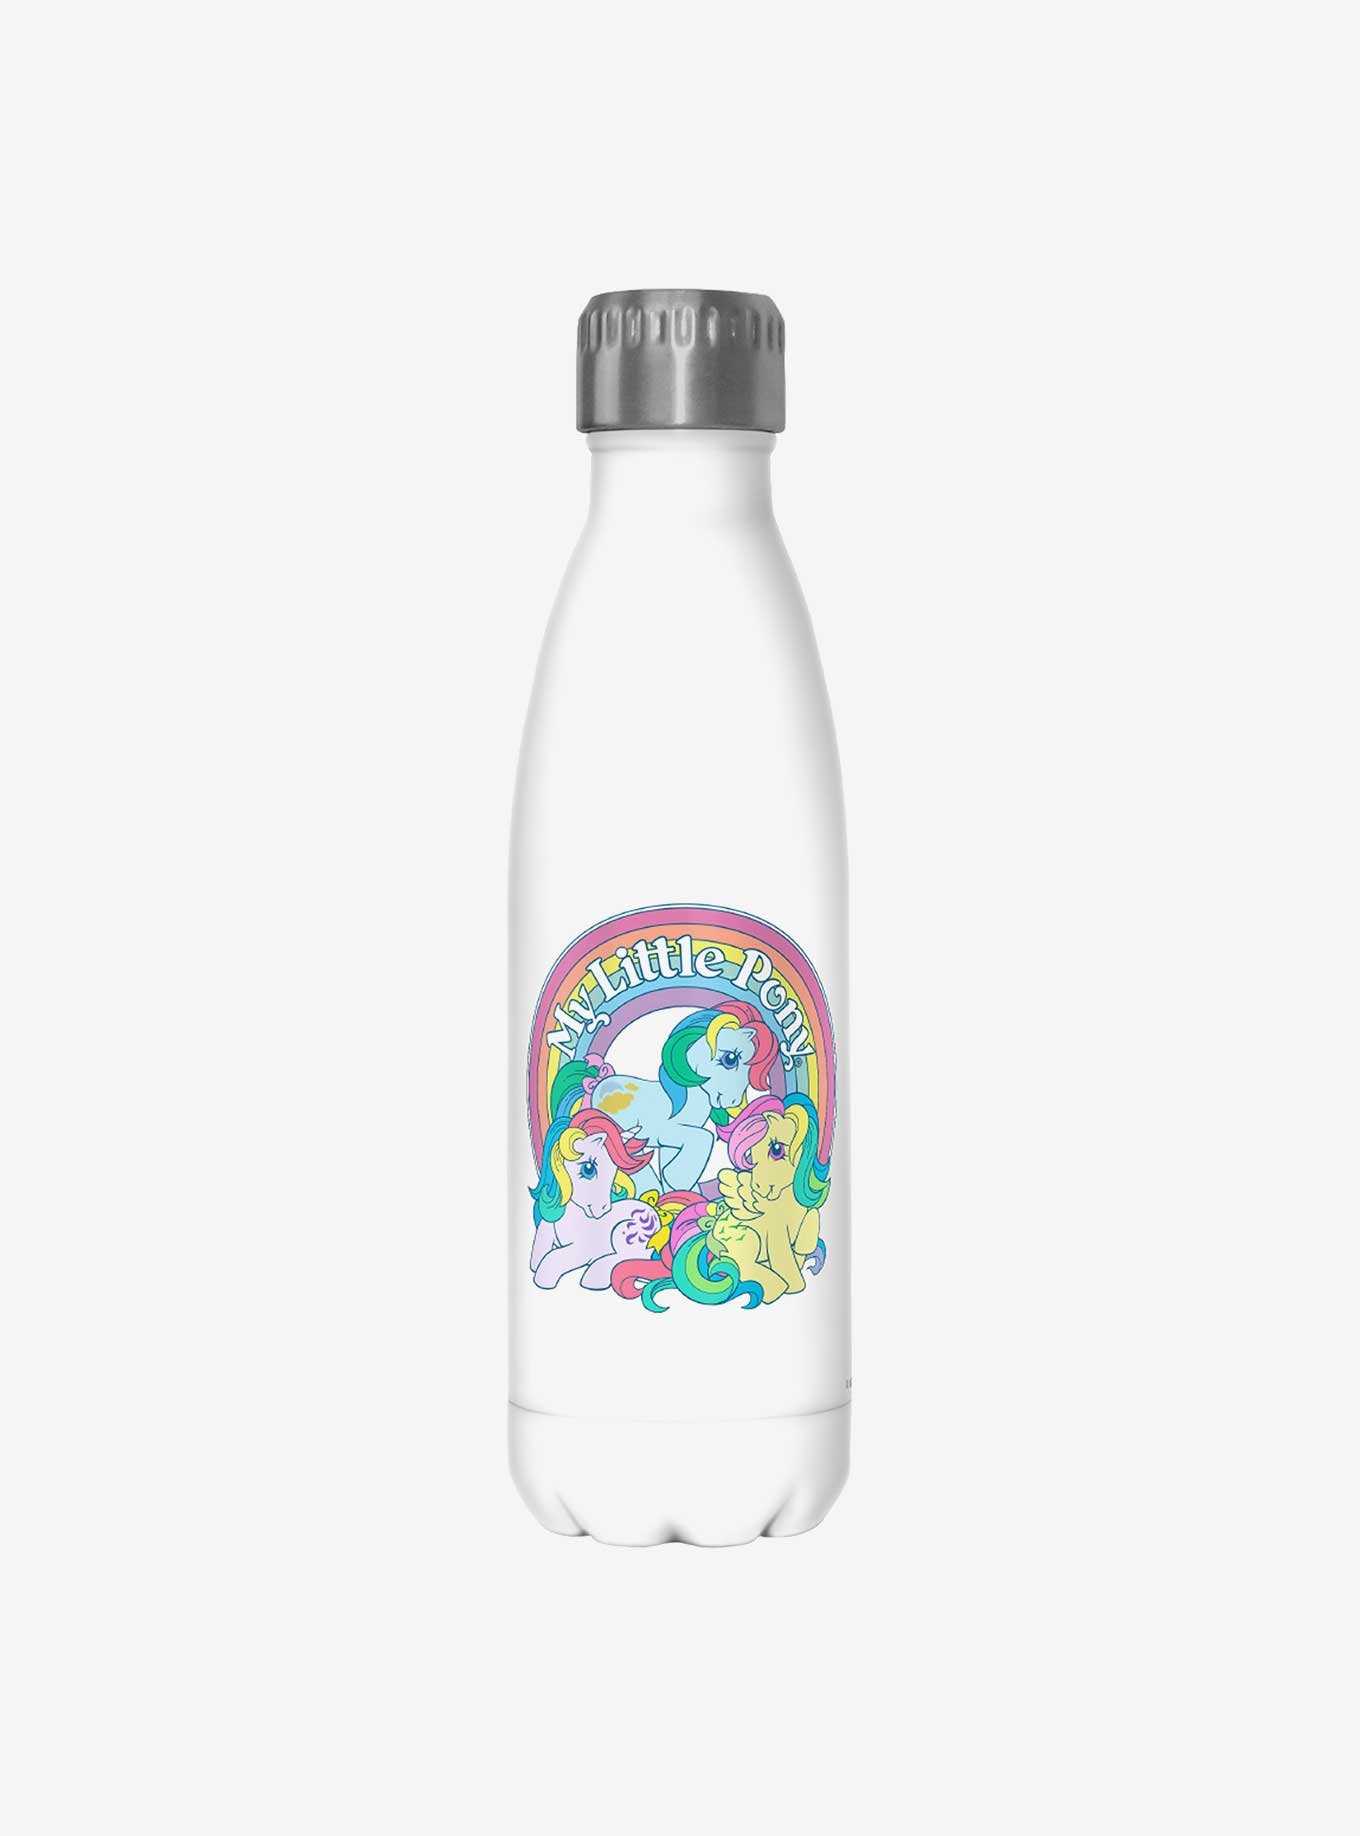 11 Cute Water Bottles 2020 — Chic Water Bottles